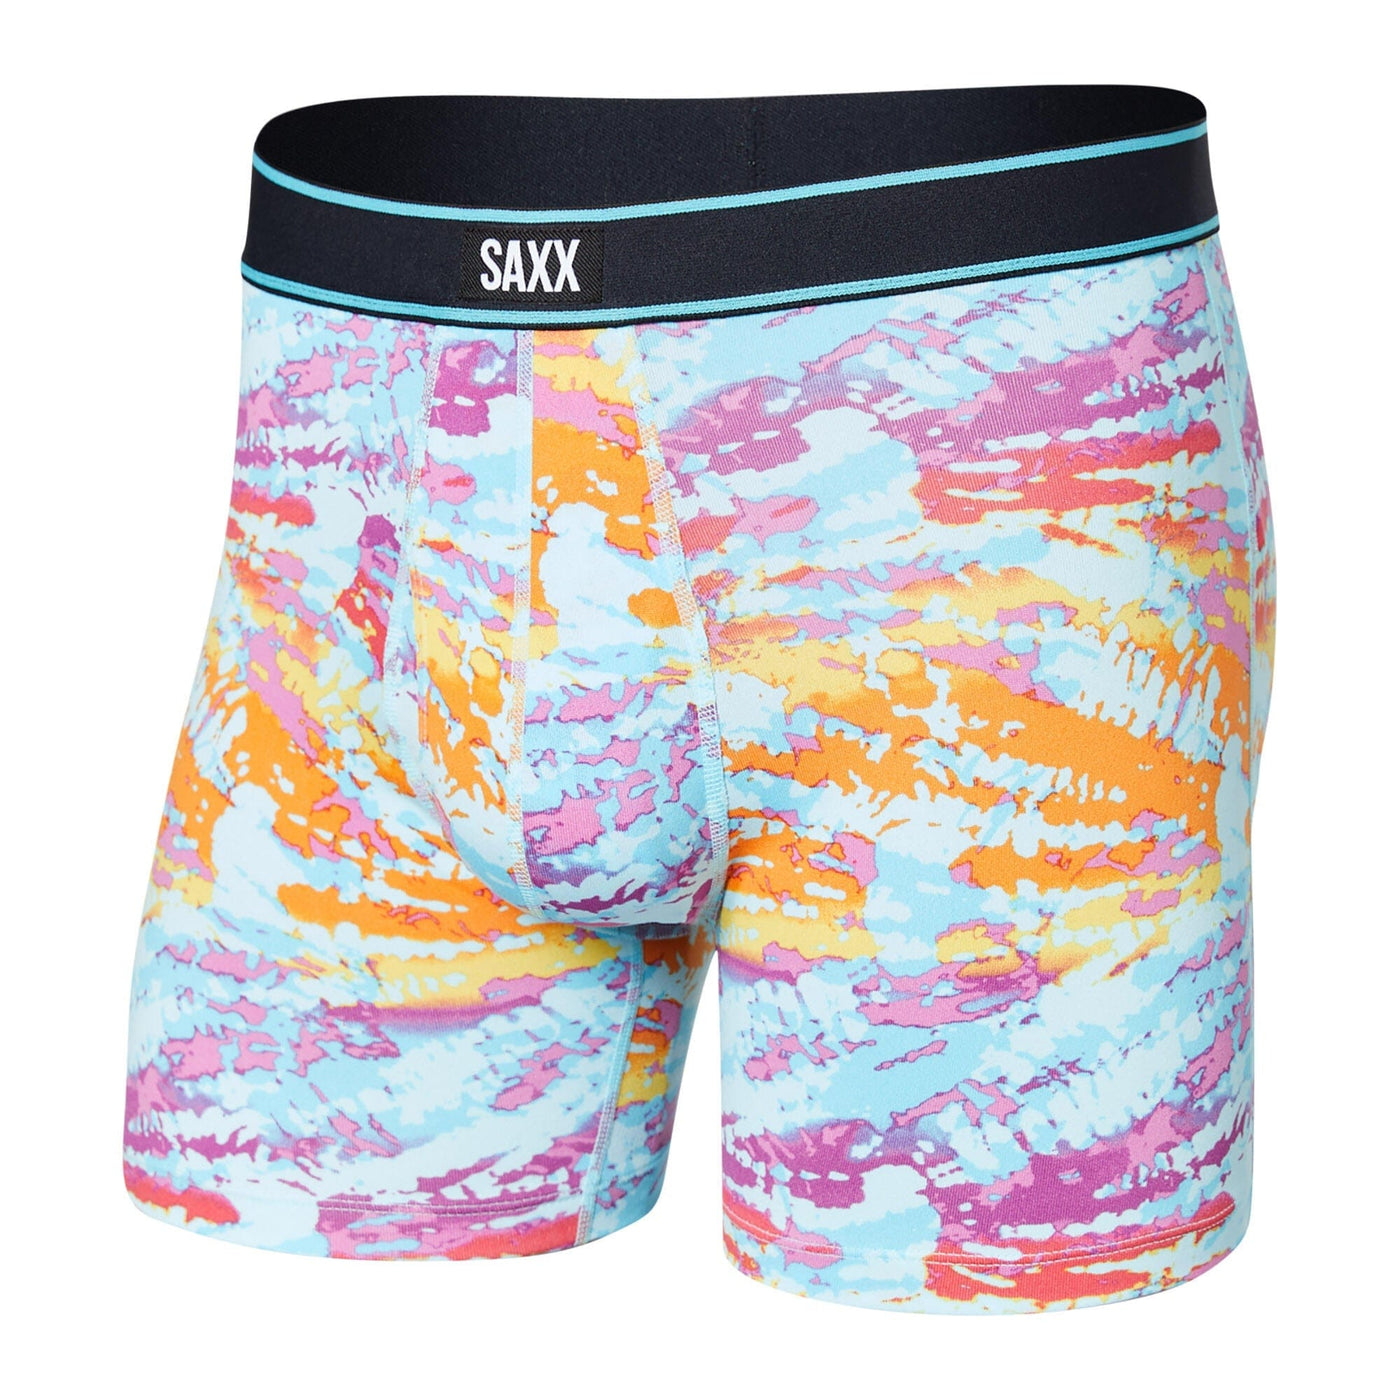 Saxx Daytripper Boxers - Ombre Tie Dye - Multi - TheHockeyShop.com